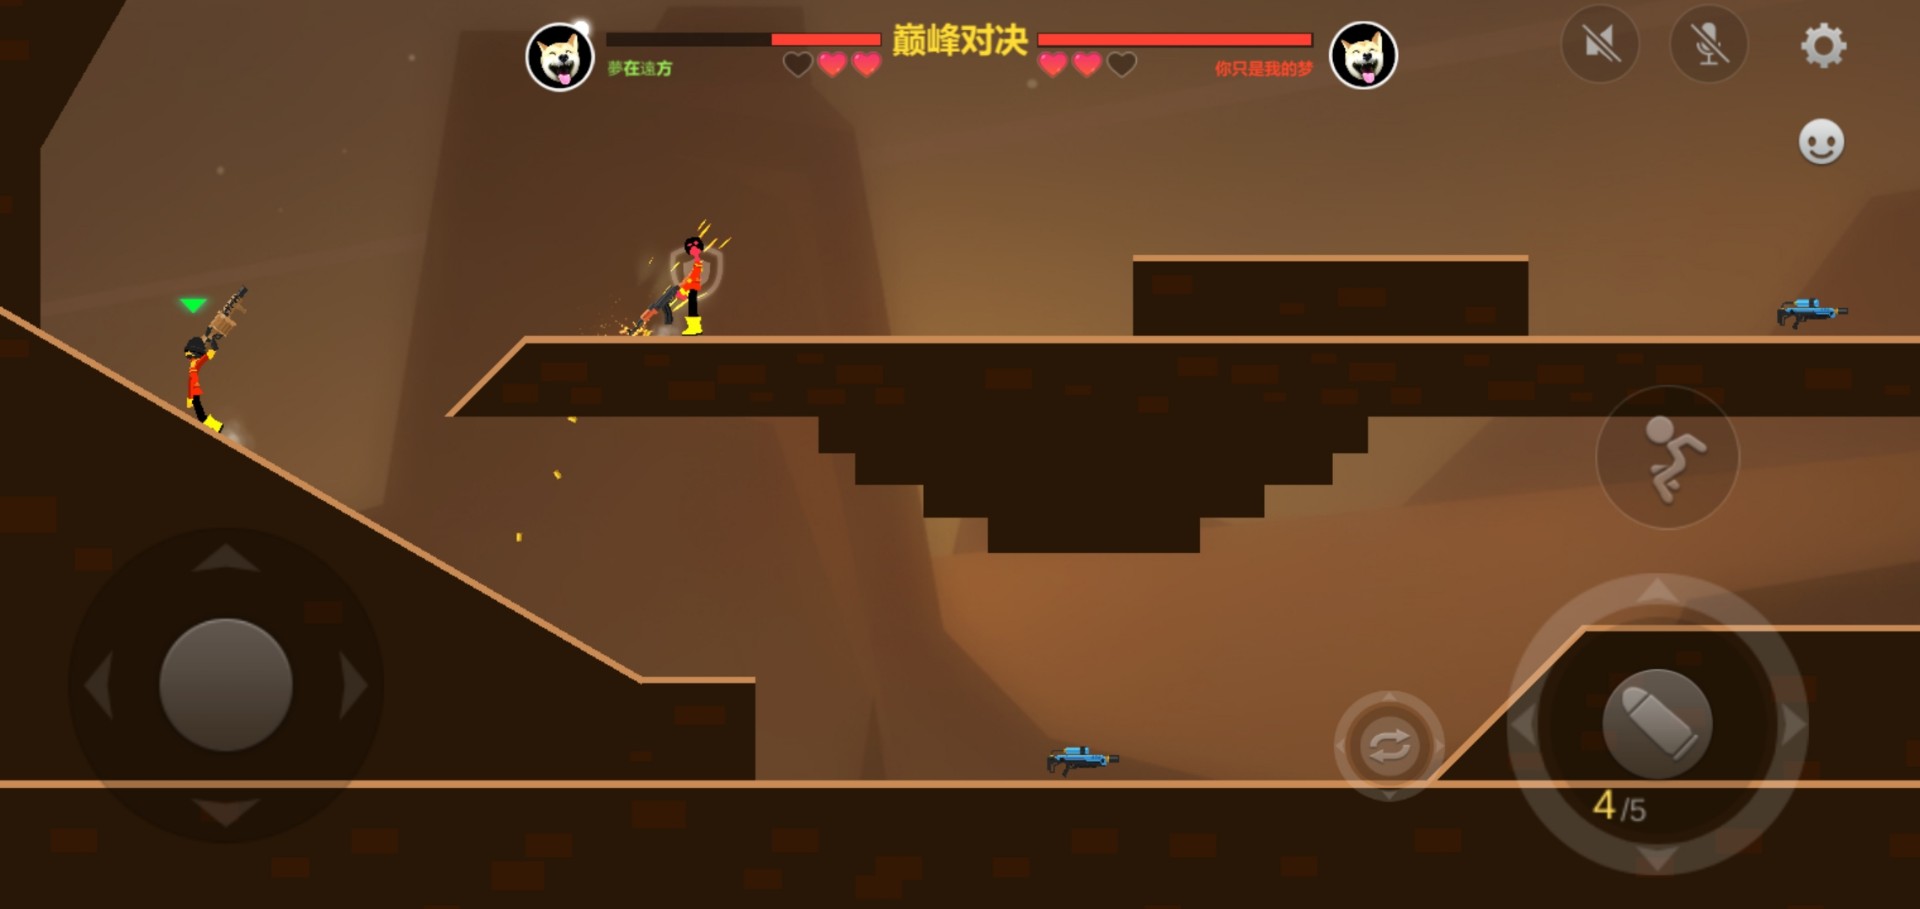  Screenshot of Matchmaker mobile game app